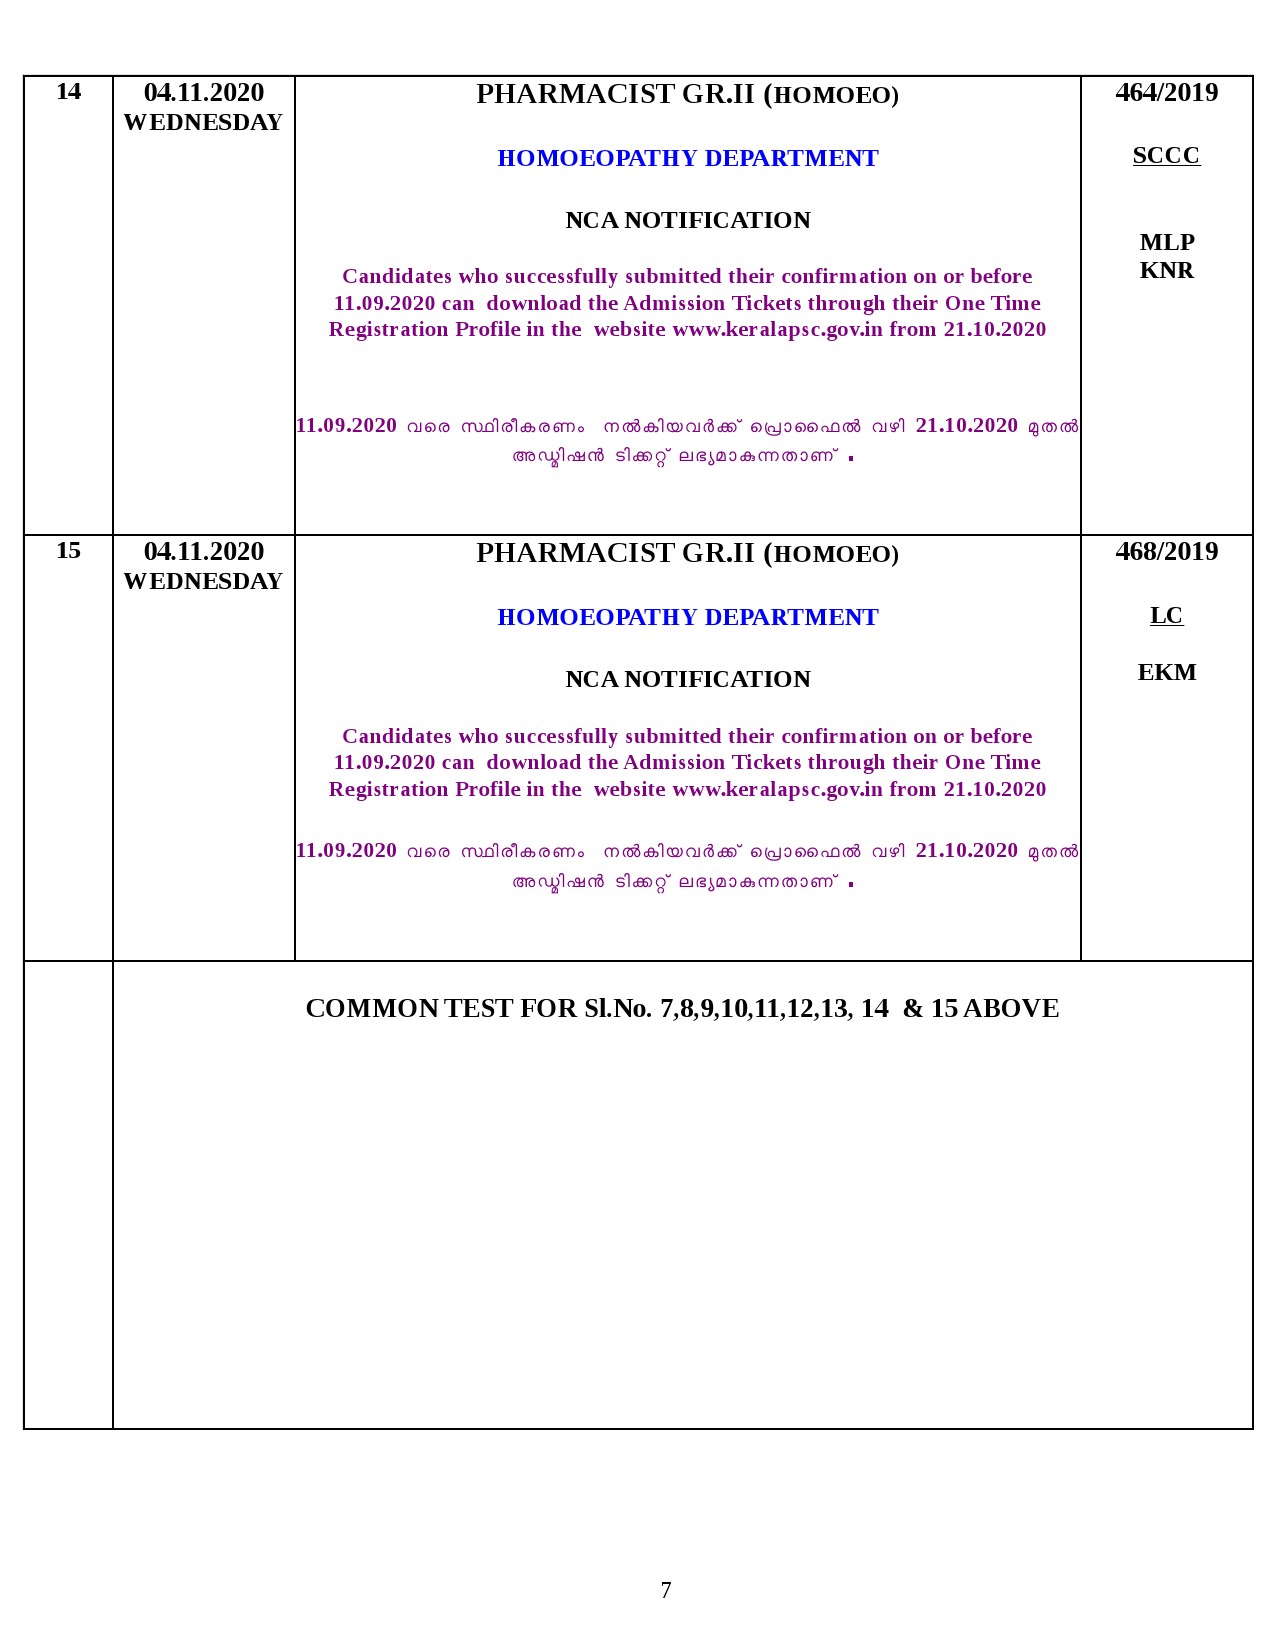 Kerala PSC Final Exam Schedule for November 2020 - Notification Image 7